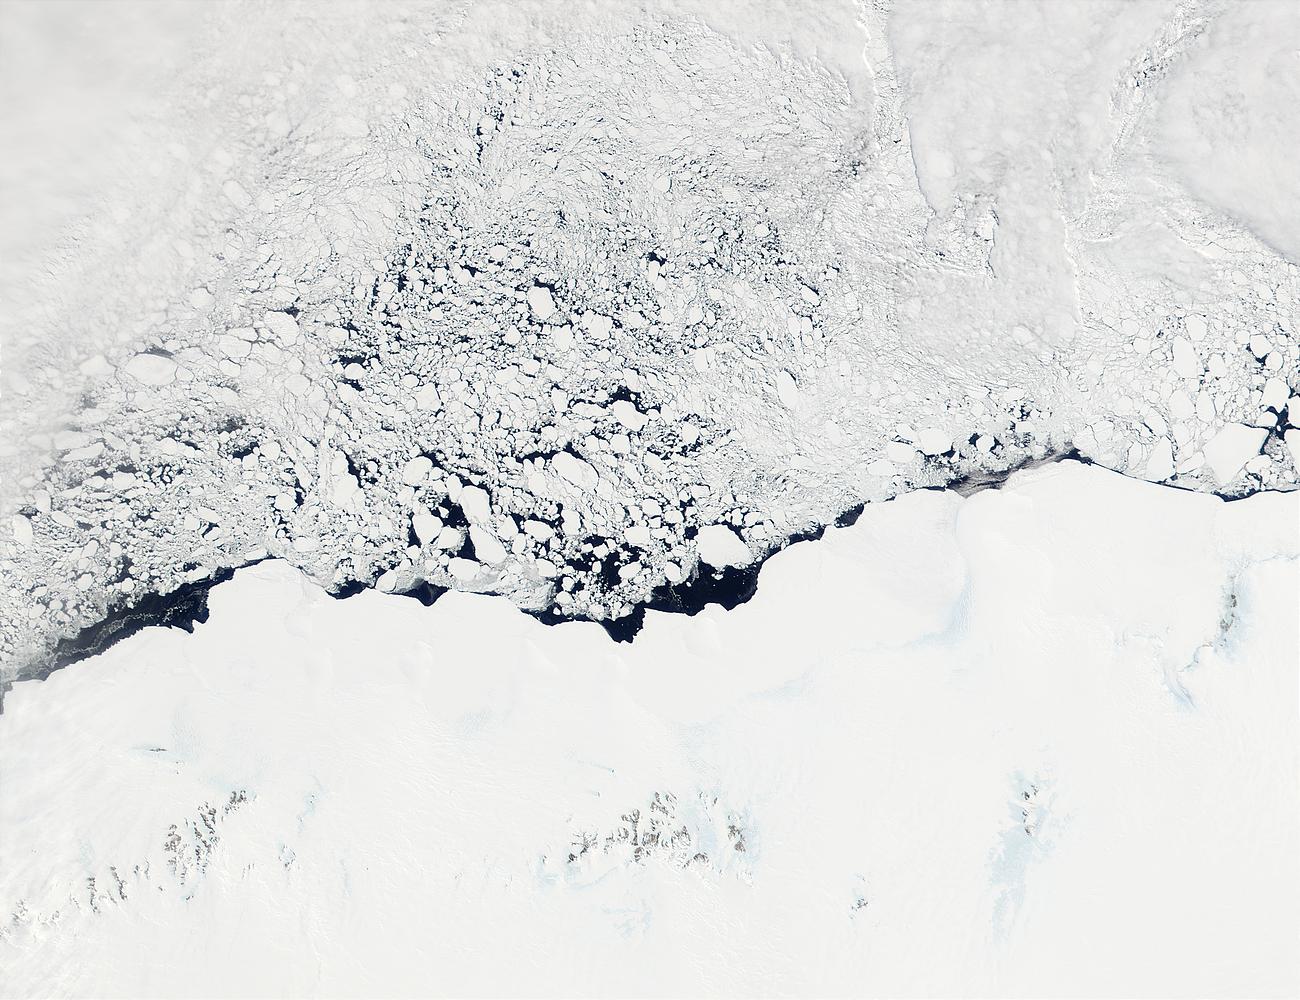 Princess Astrid Coast, Princess Ragnhild Coast, and Prince Harald Coast, Antarctica - related image preview